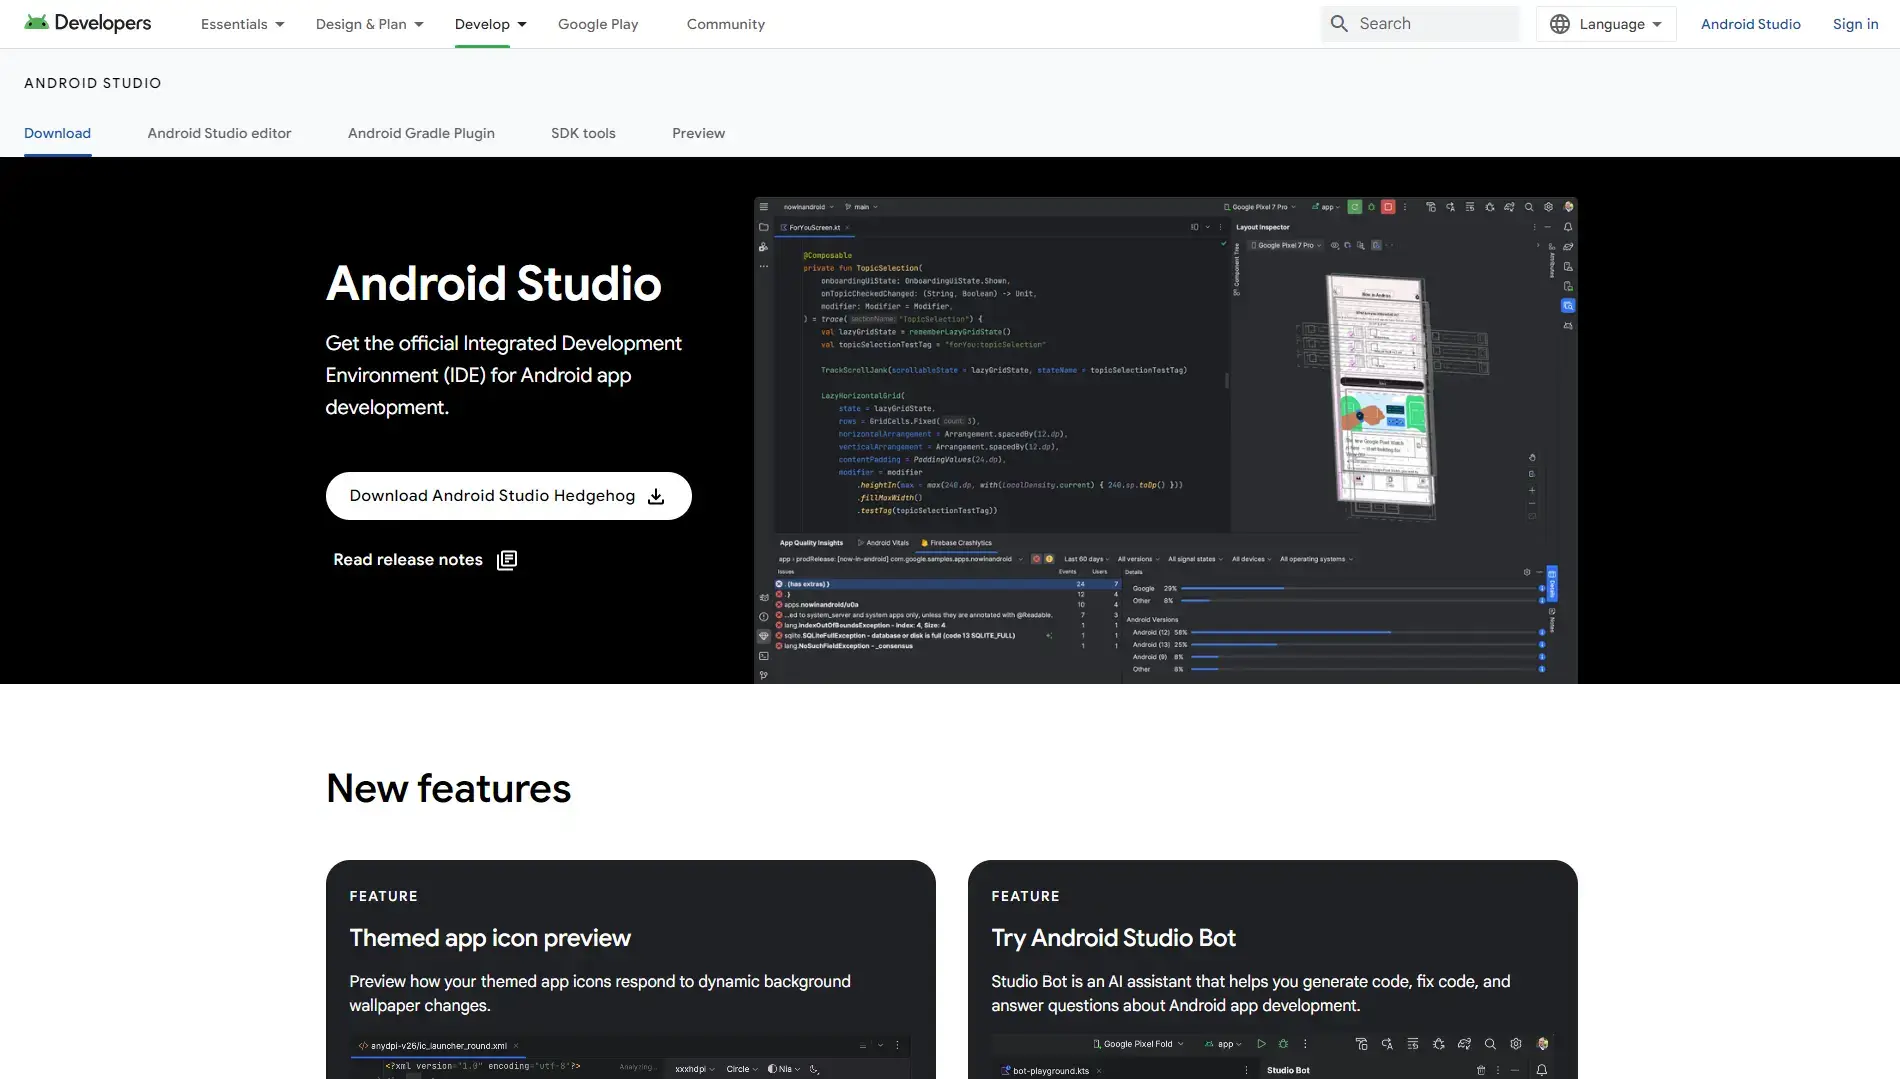 Android Studio website homepage image.